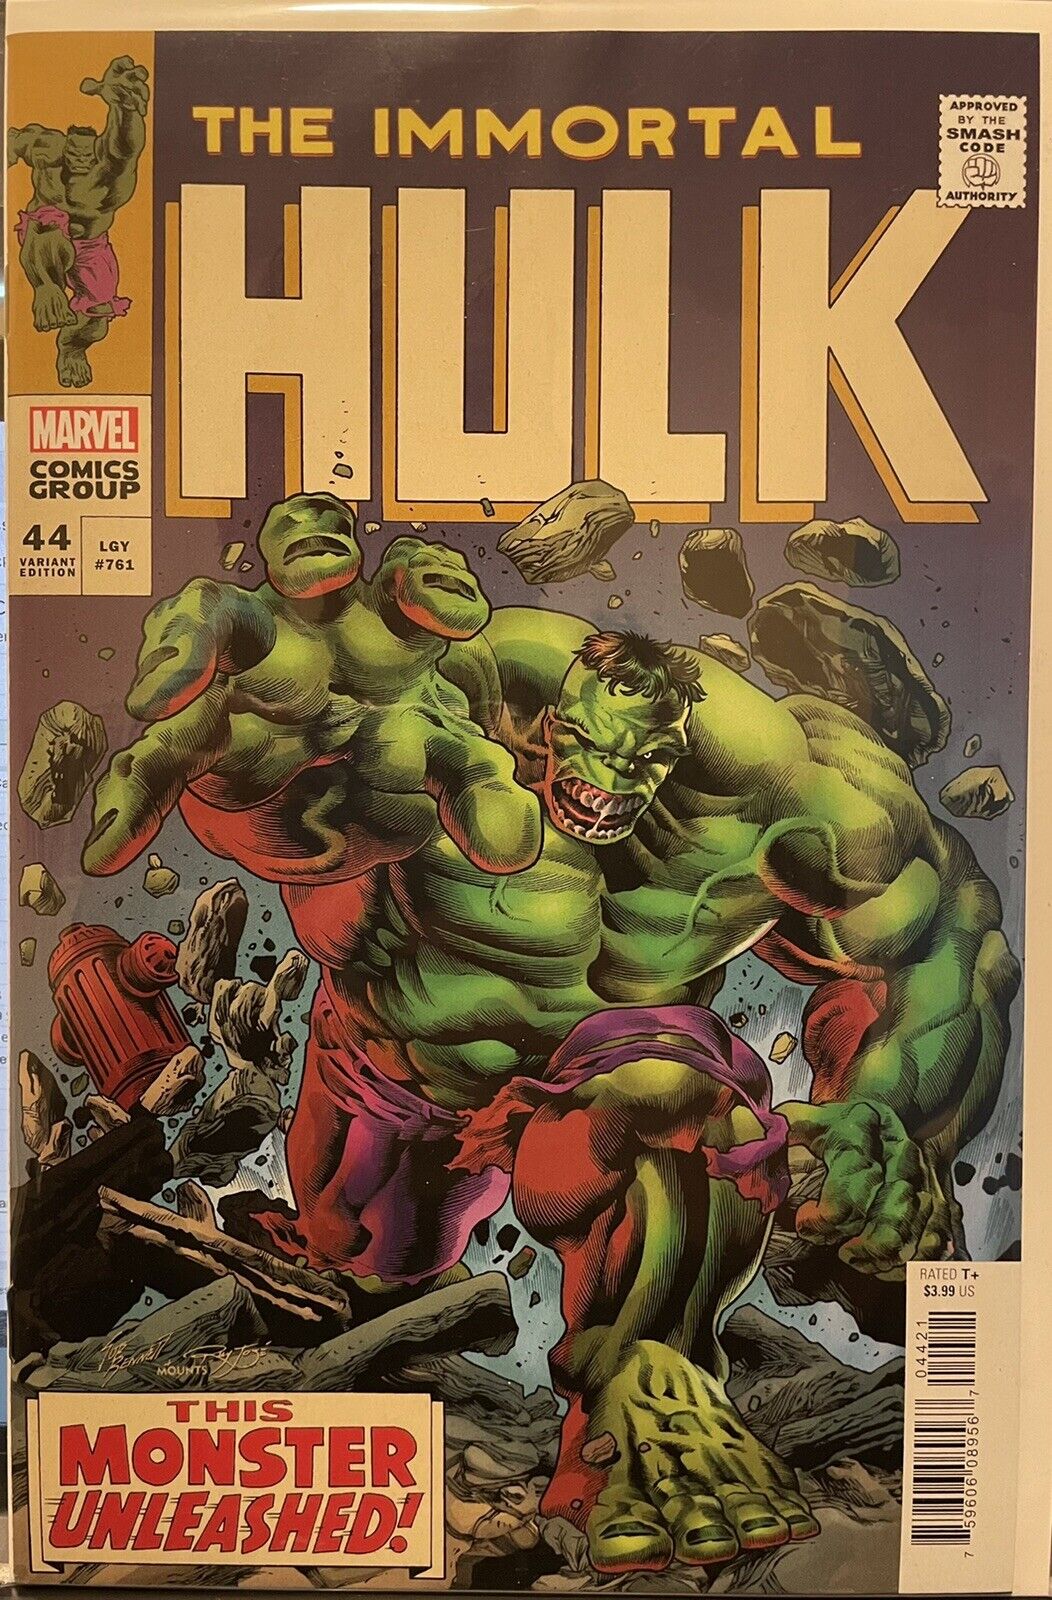 The Immortal Hulk #44 Variant